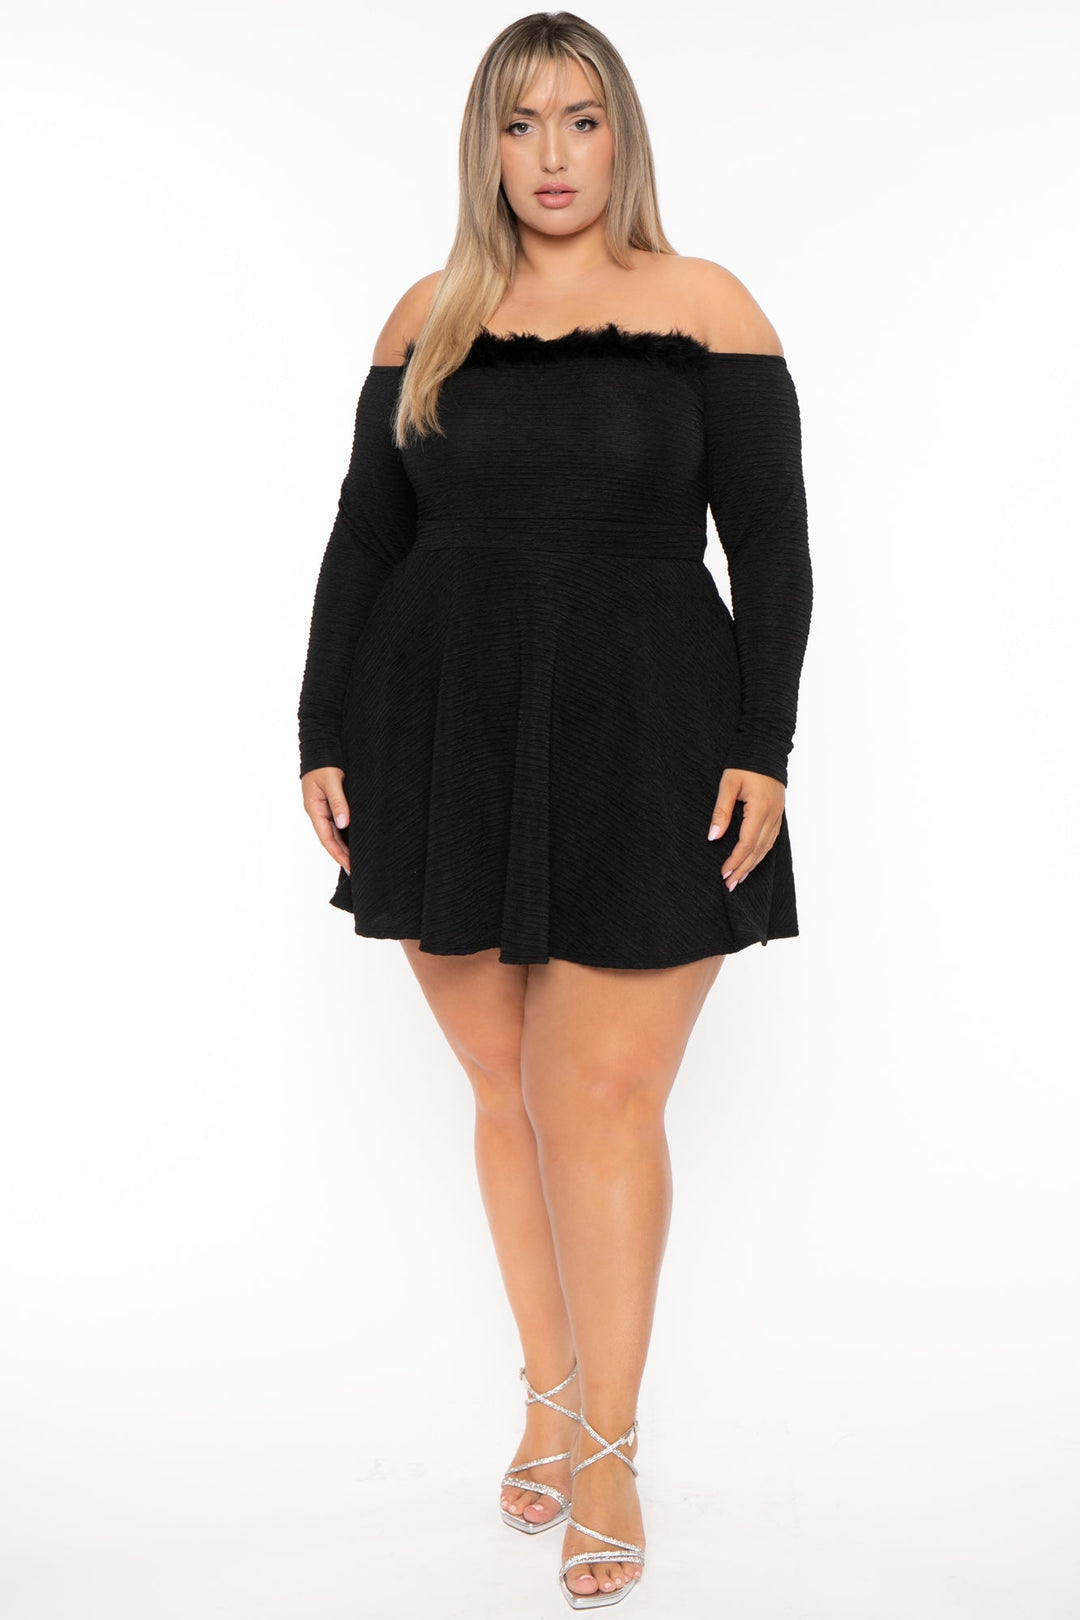 Curvy Sense Dresses Plus Size Vivienna Boa Flare Dress - Black